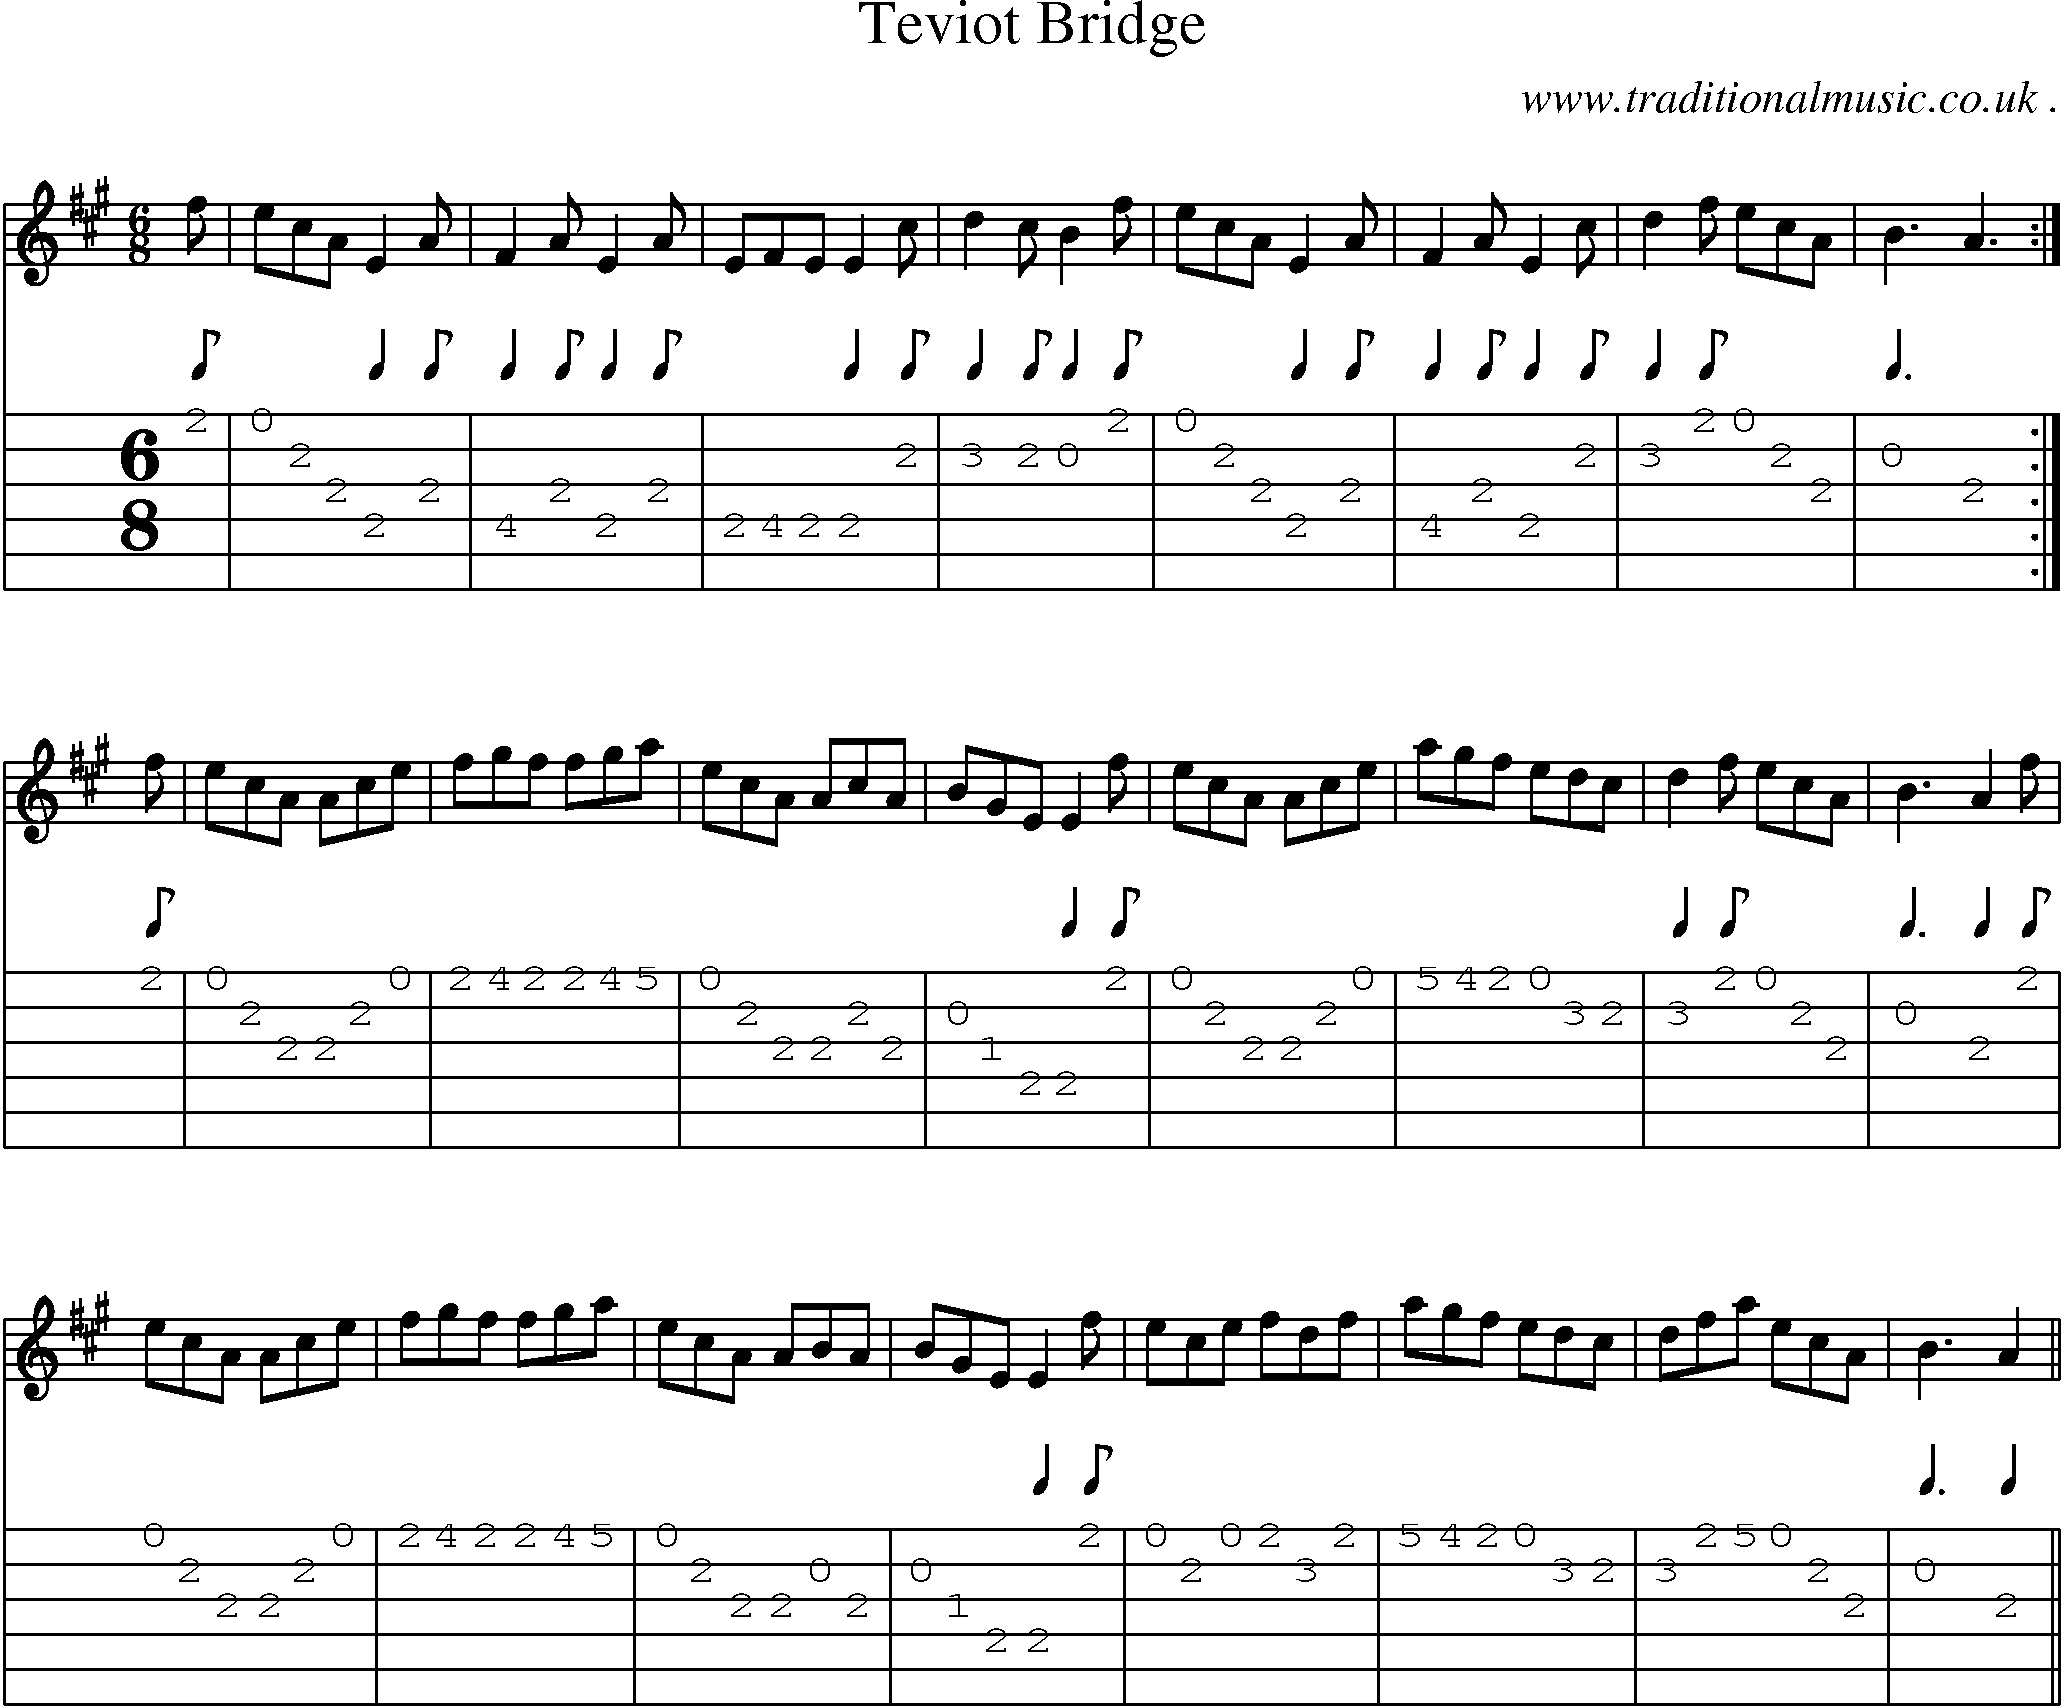 Sheet-music  score, Chords and Guitar Tabs for Teviot Bridge